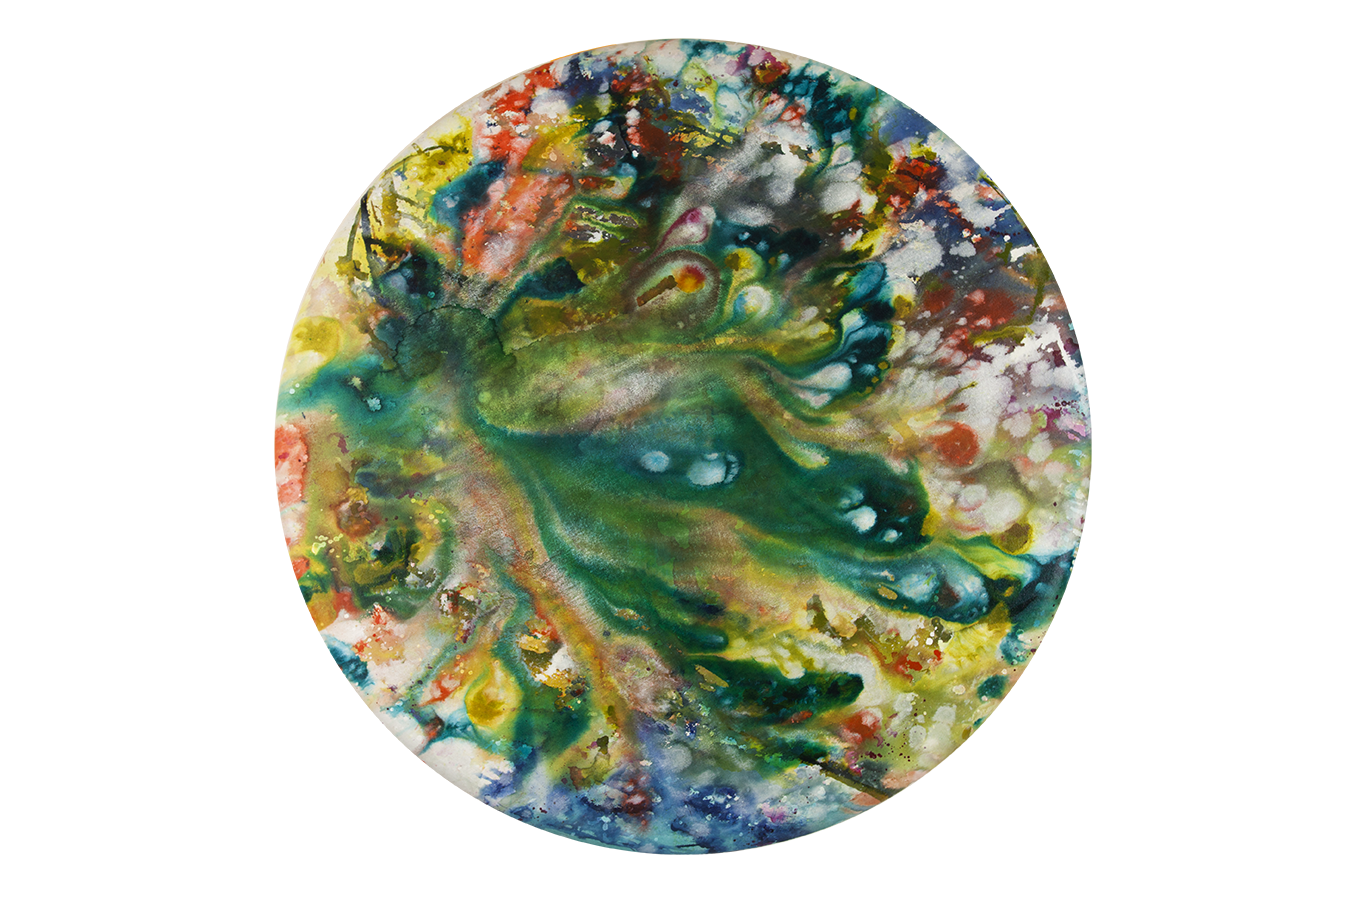 ©2017 Alicia R Peterson, *Galactic Oceans*. Acrylic on 36-inch diameter convex canvas. Photographer: Peter Scheer.